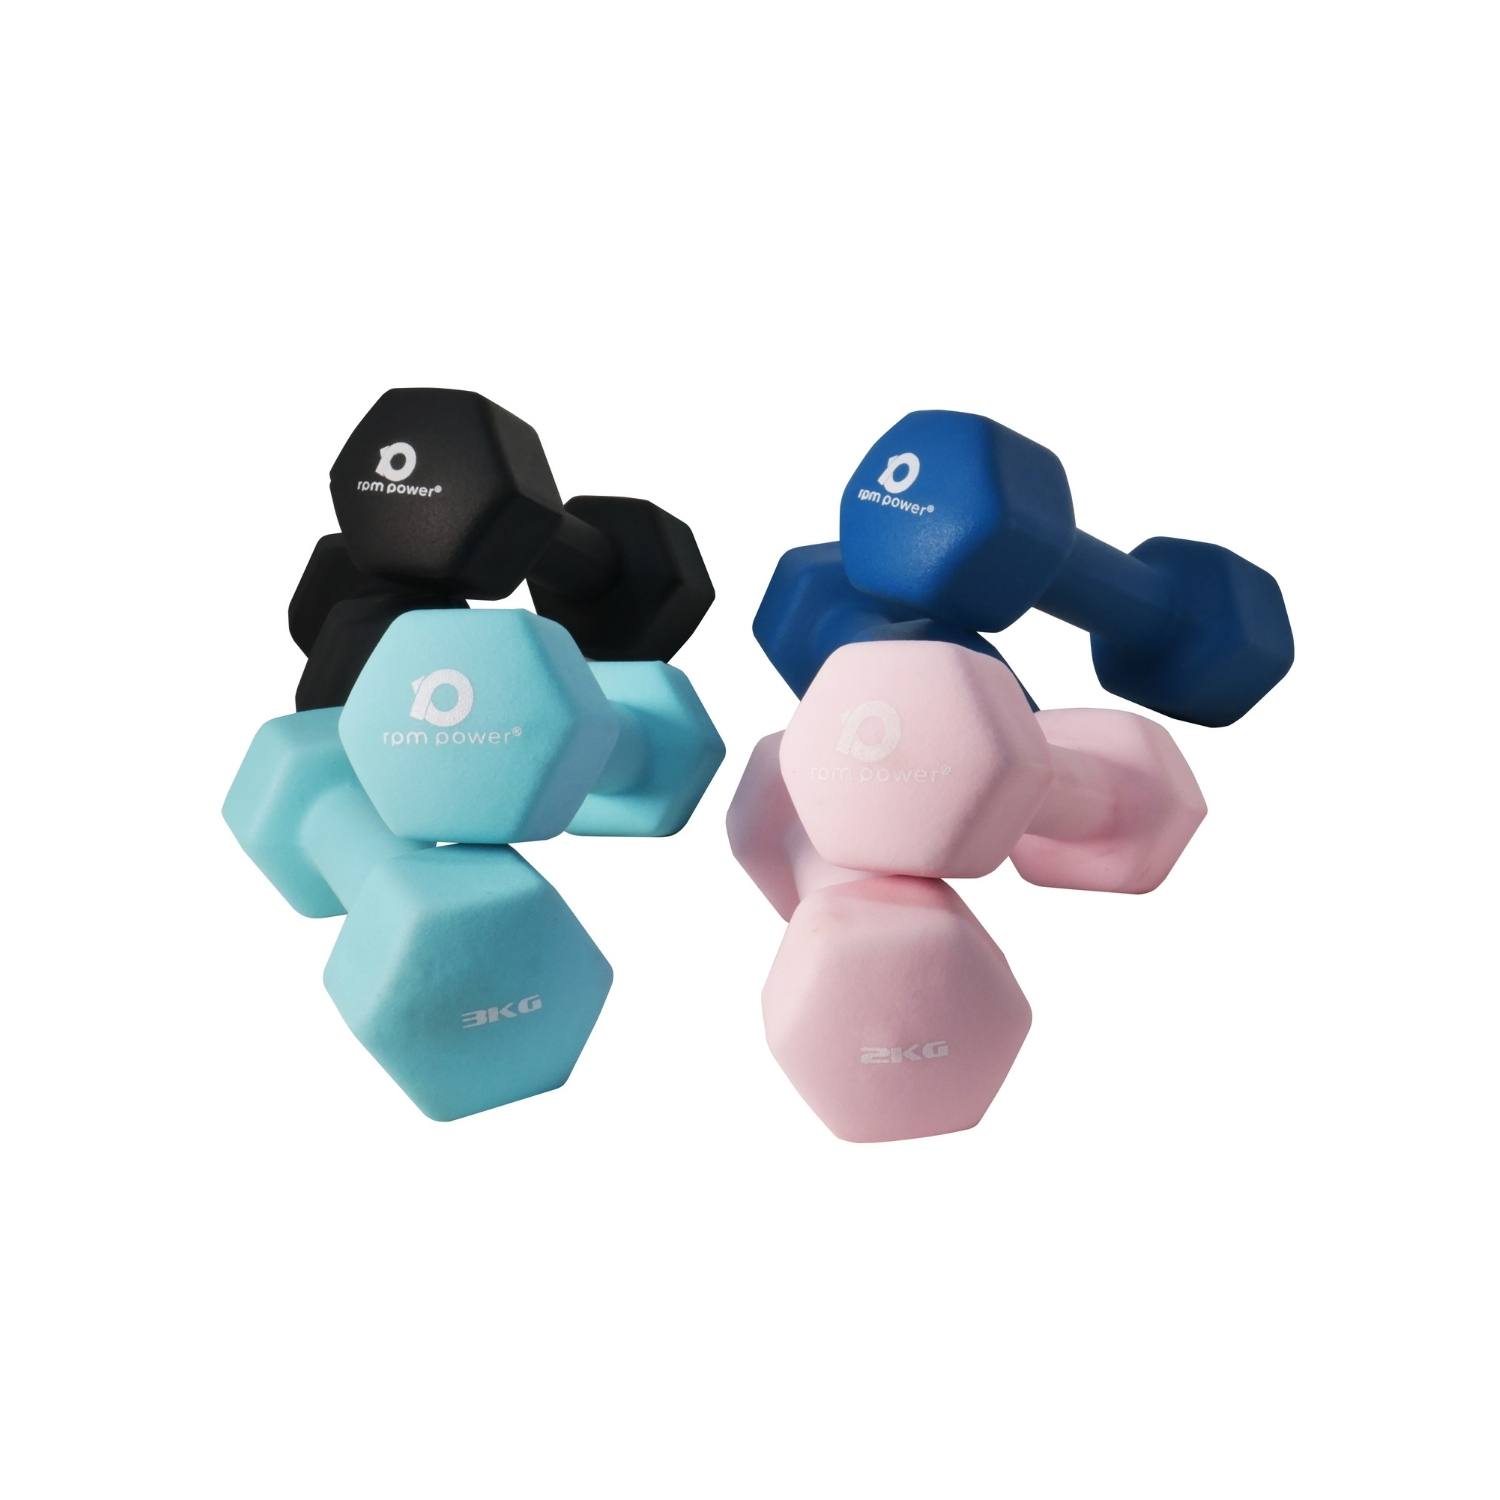 Pair of dumbbells Pure2Improve neoprene 2x 3Kg - Set of balls - Accessories  - Equipment